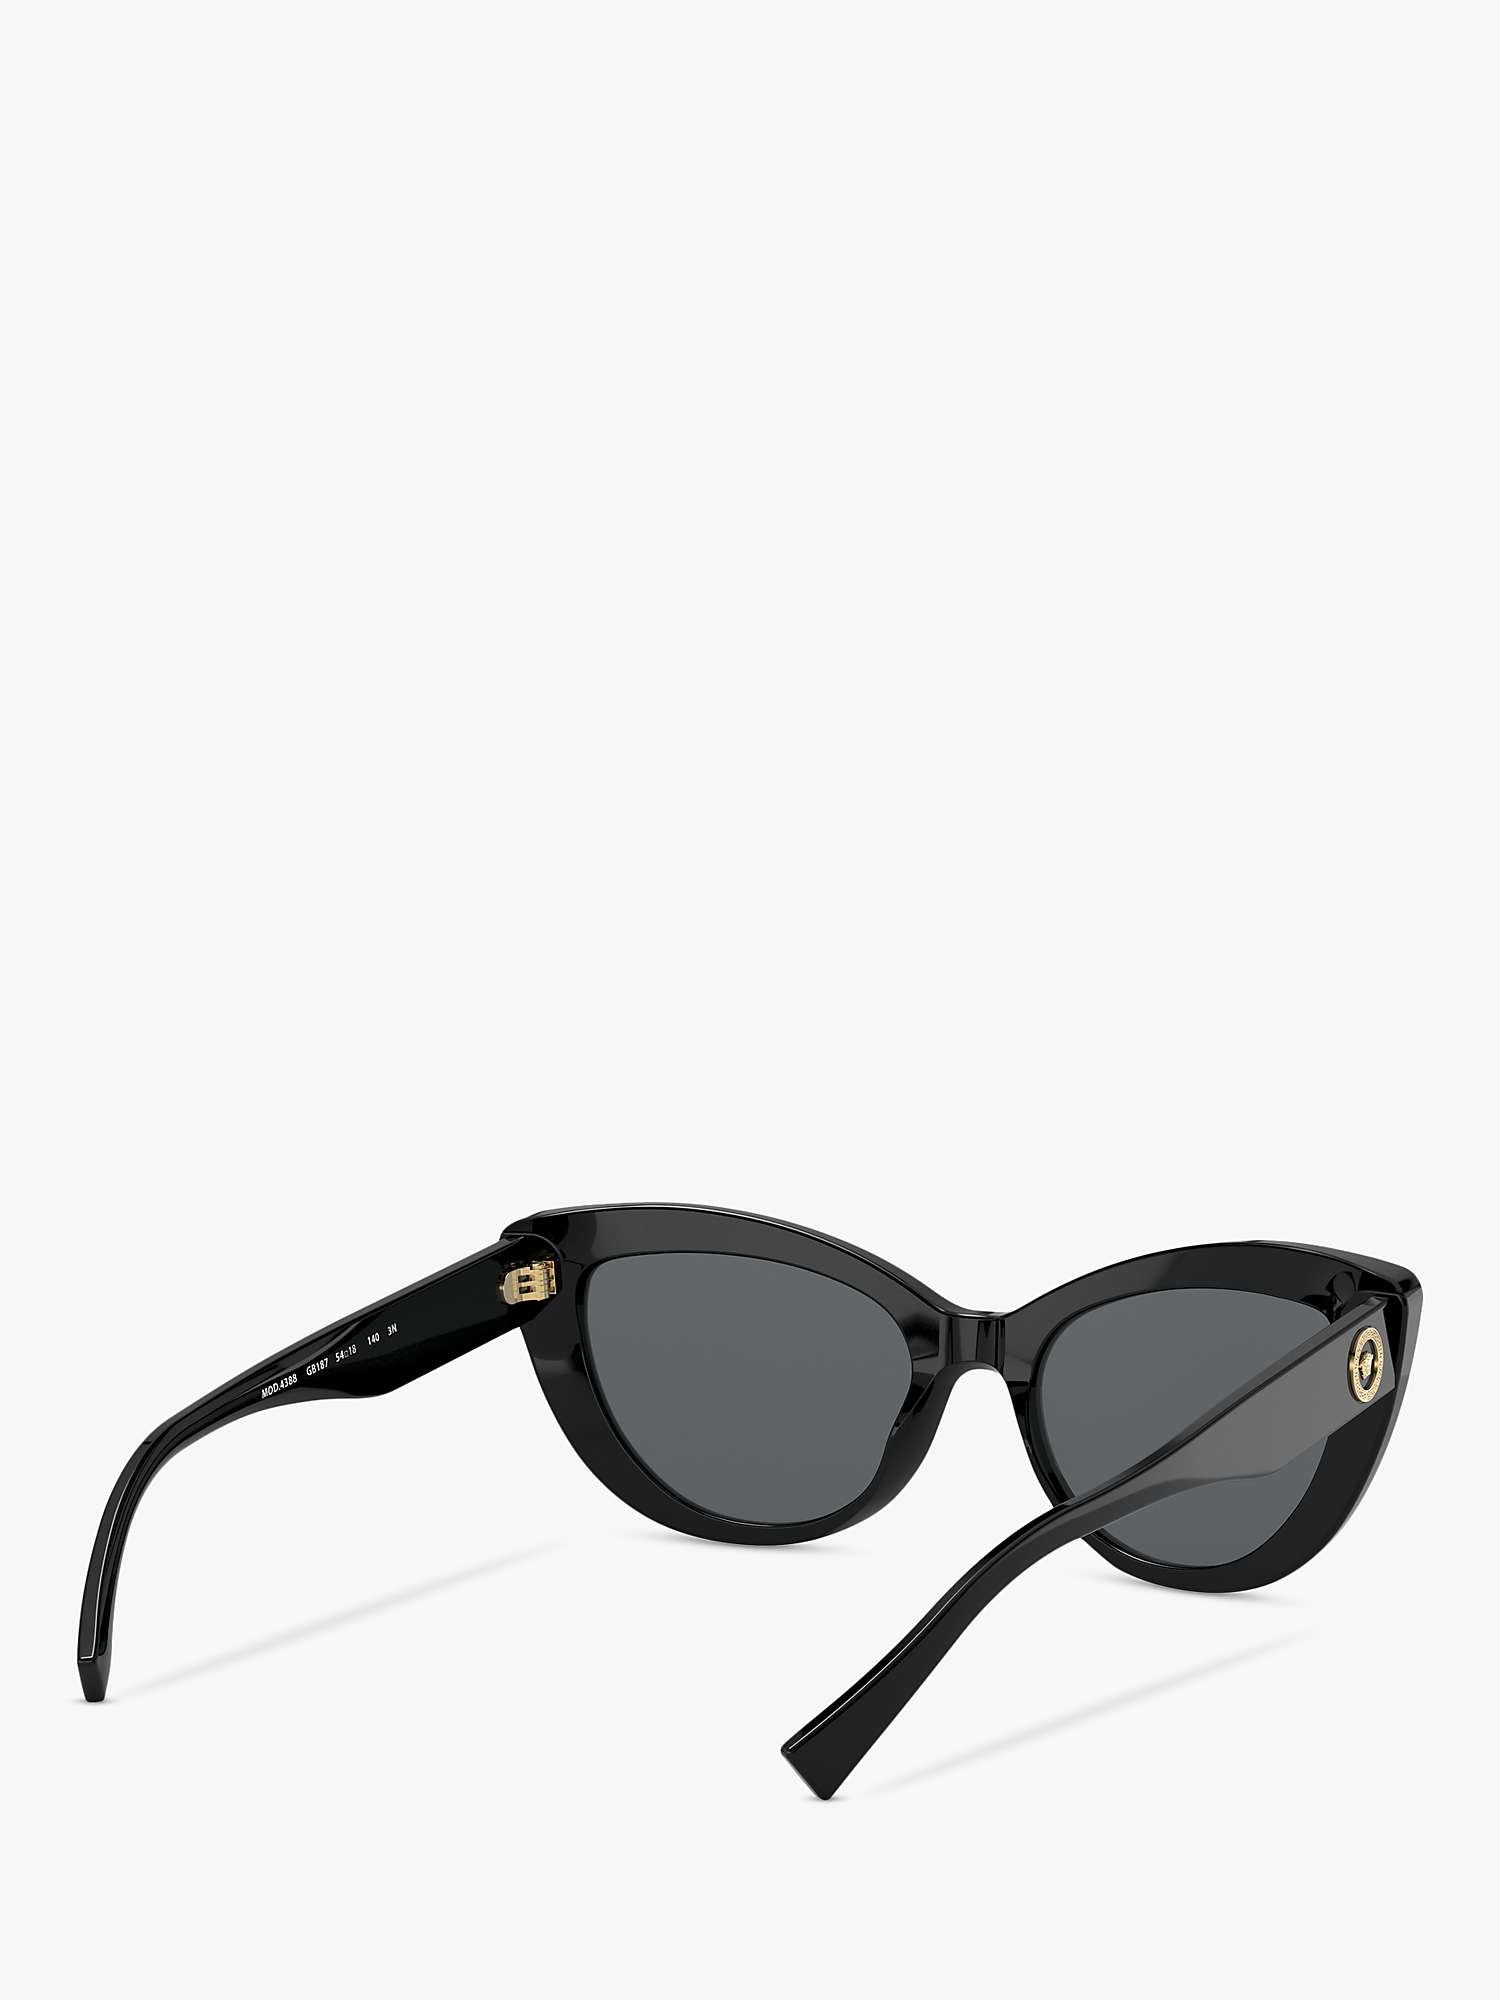 Buy Versace VE4388 Women's Cat Eye Sunglasses, Black/Grey Online at johnlewis.com